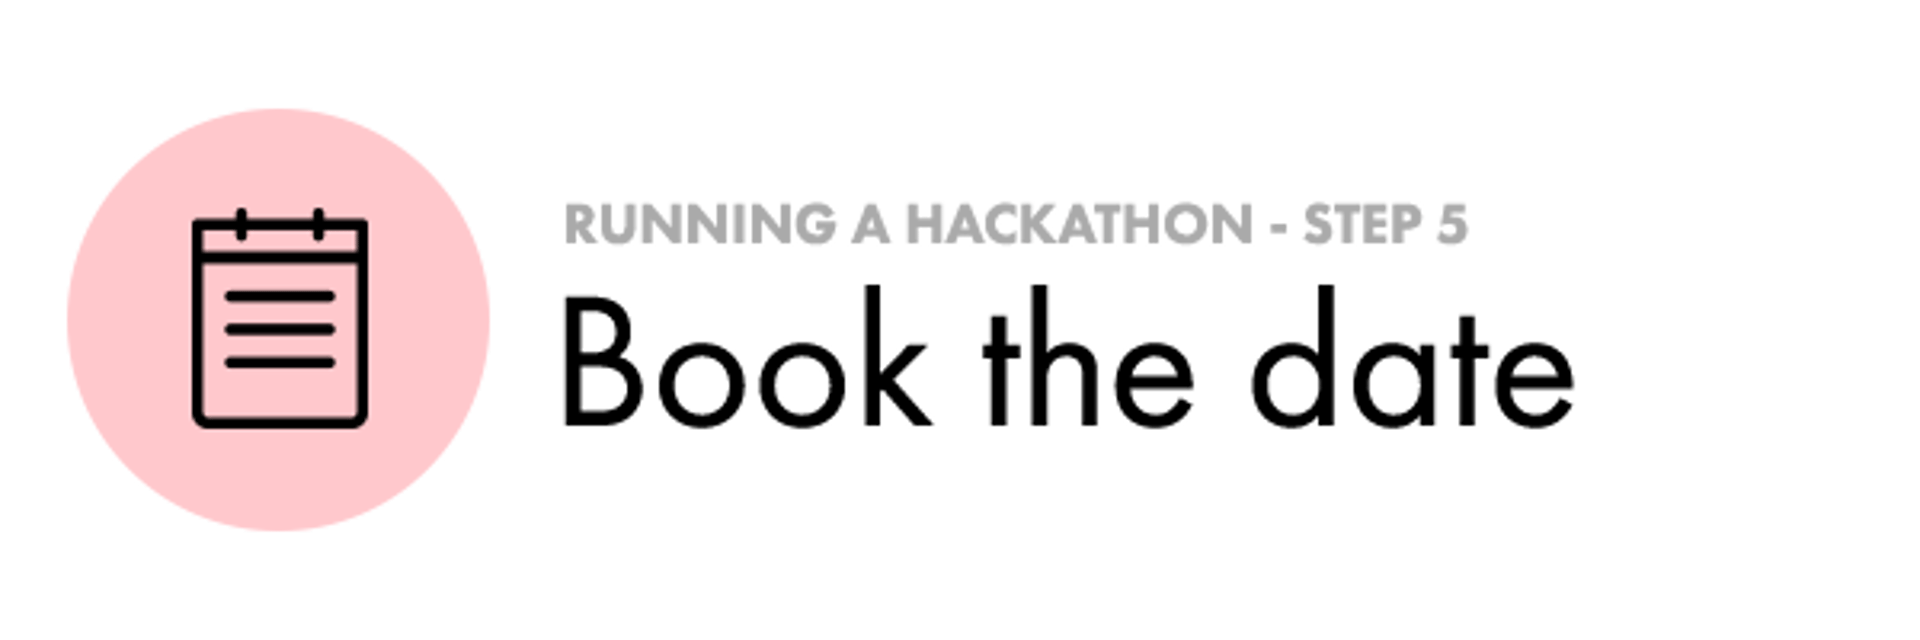 Book Hackathon Date